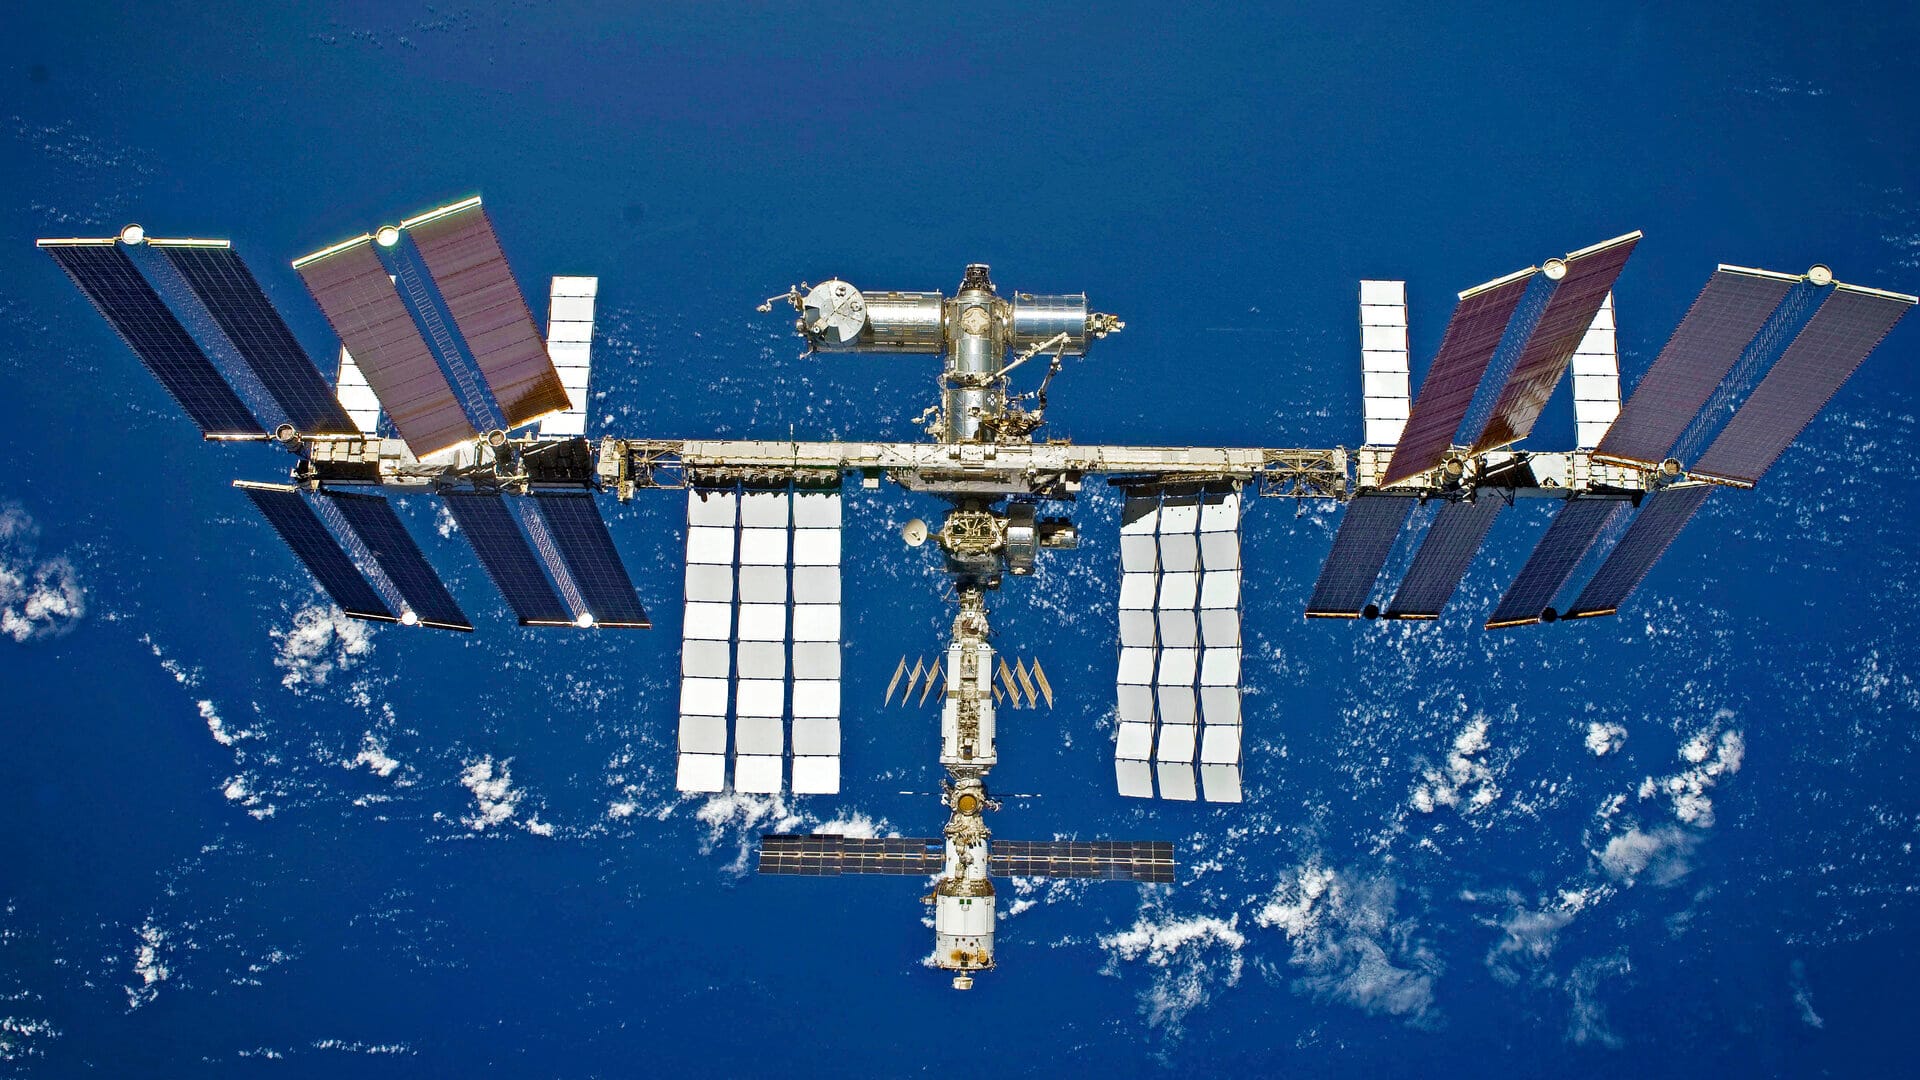 ISS ρωσική μονάδα "Nauka" 